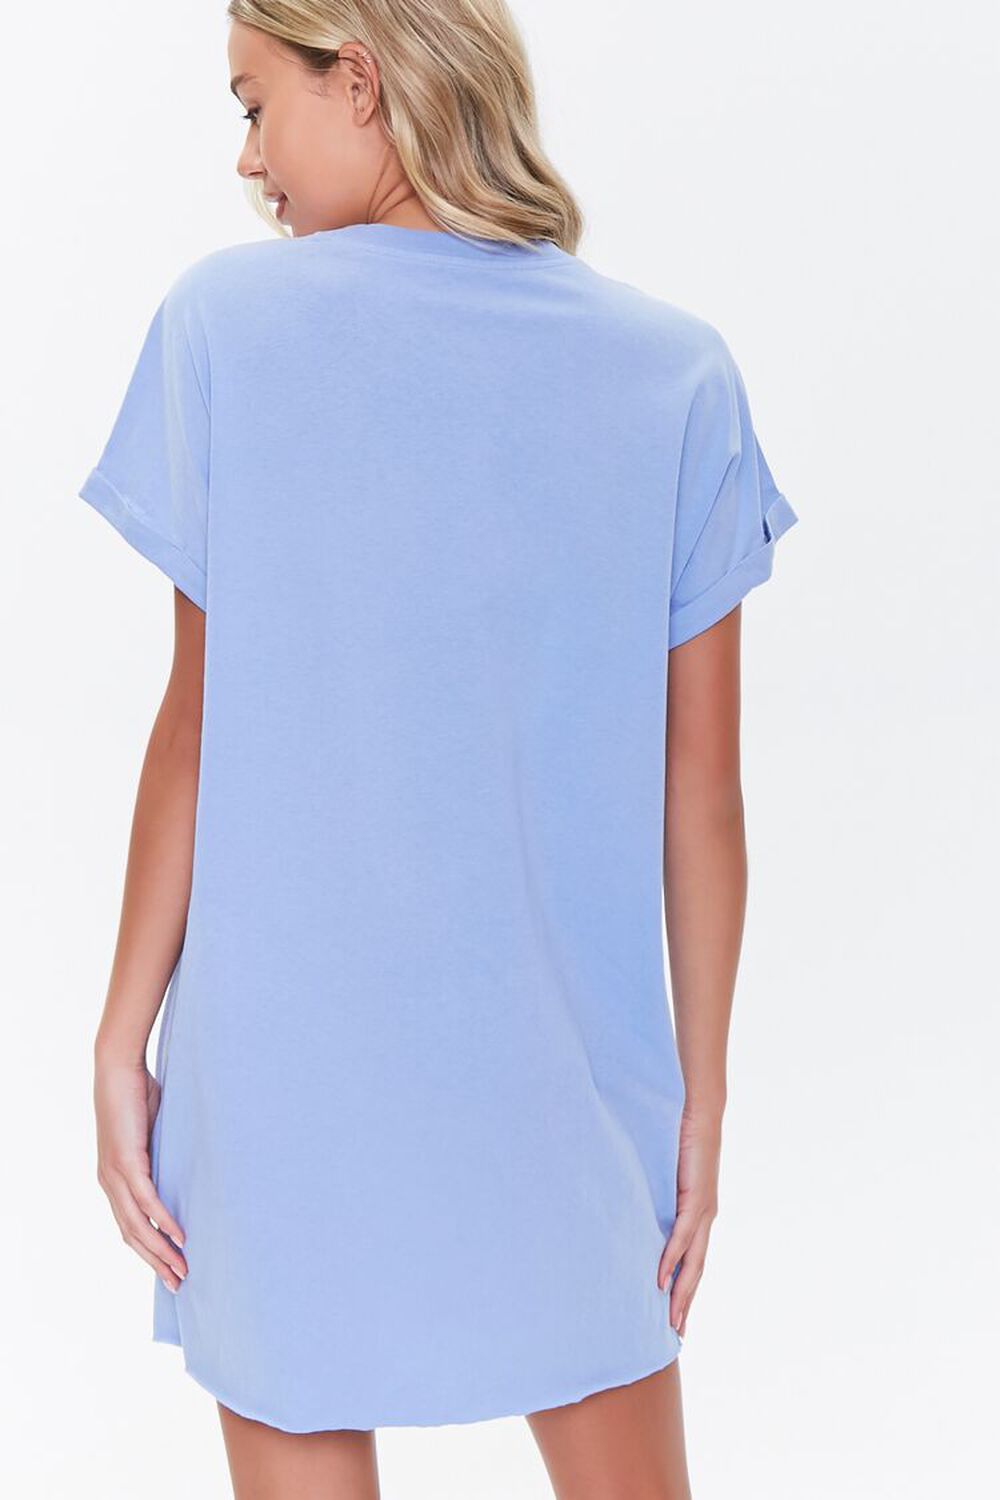 BLUE Cuffed T-Shirt Dress, image 3